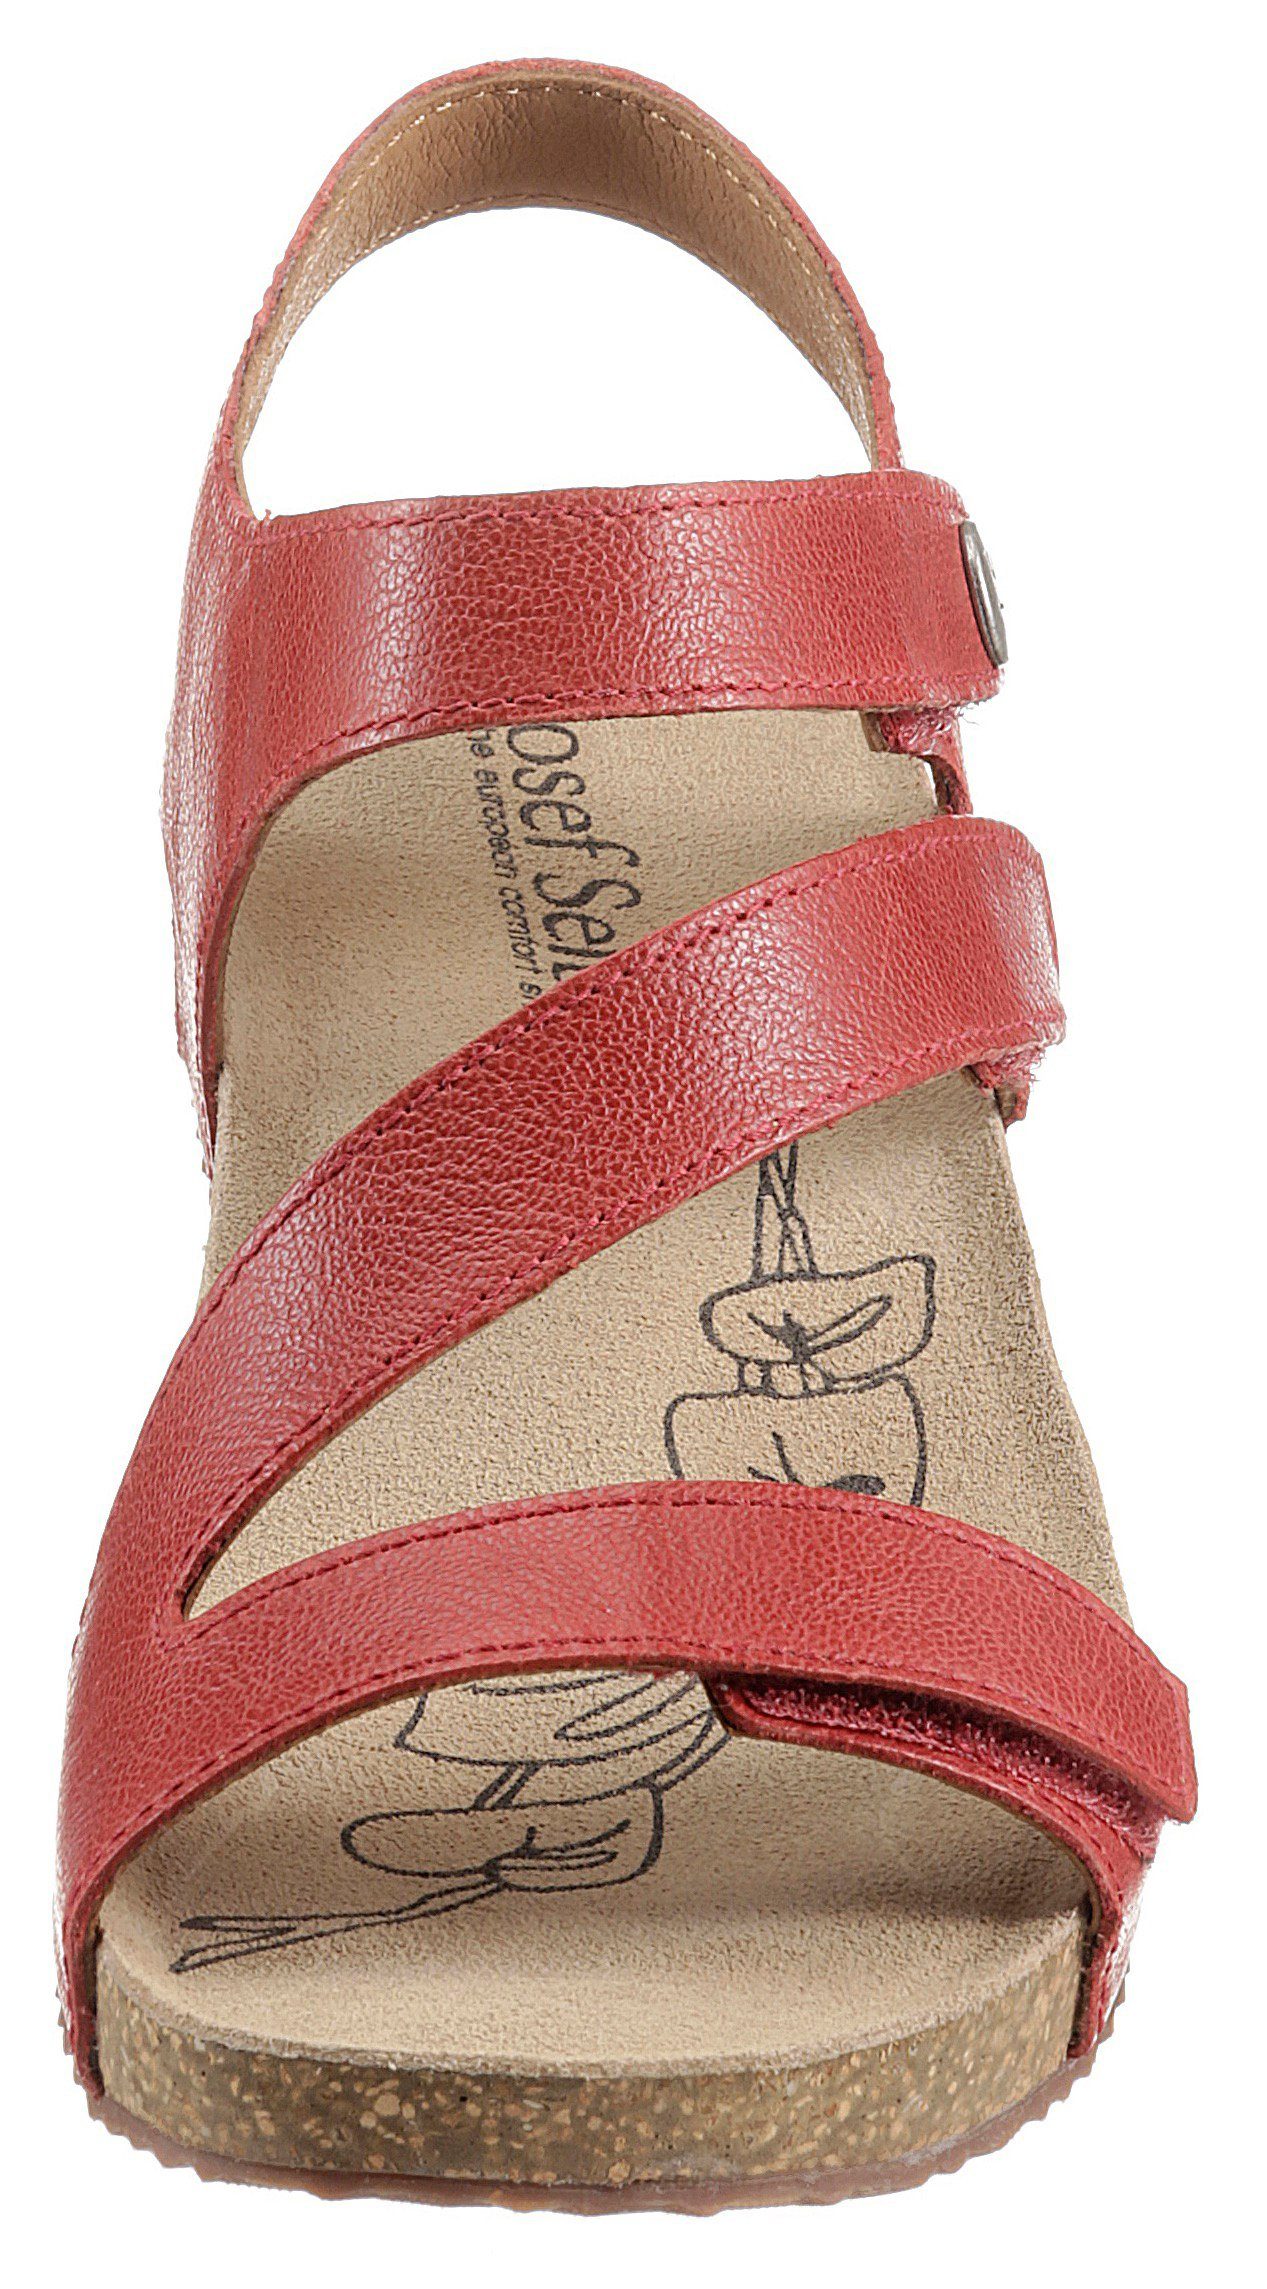 Josef Seibel TONGA Klettverschlüssen praktischen Sandale 25 mit rot